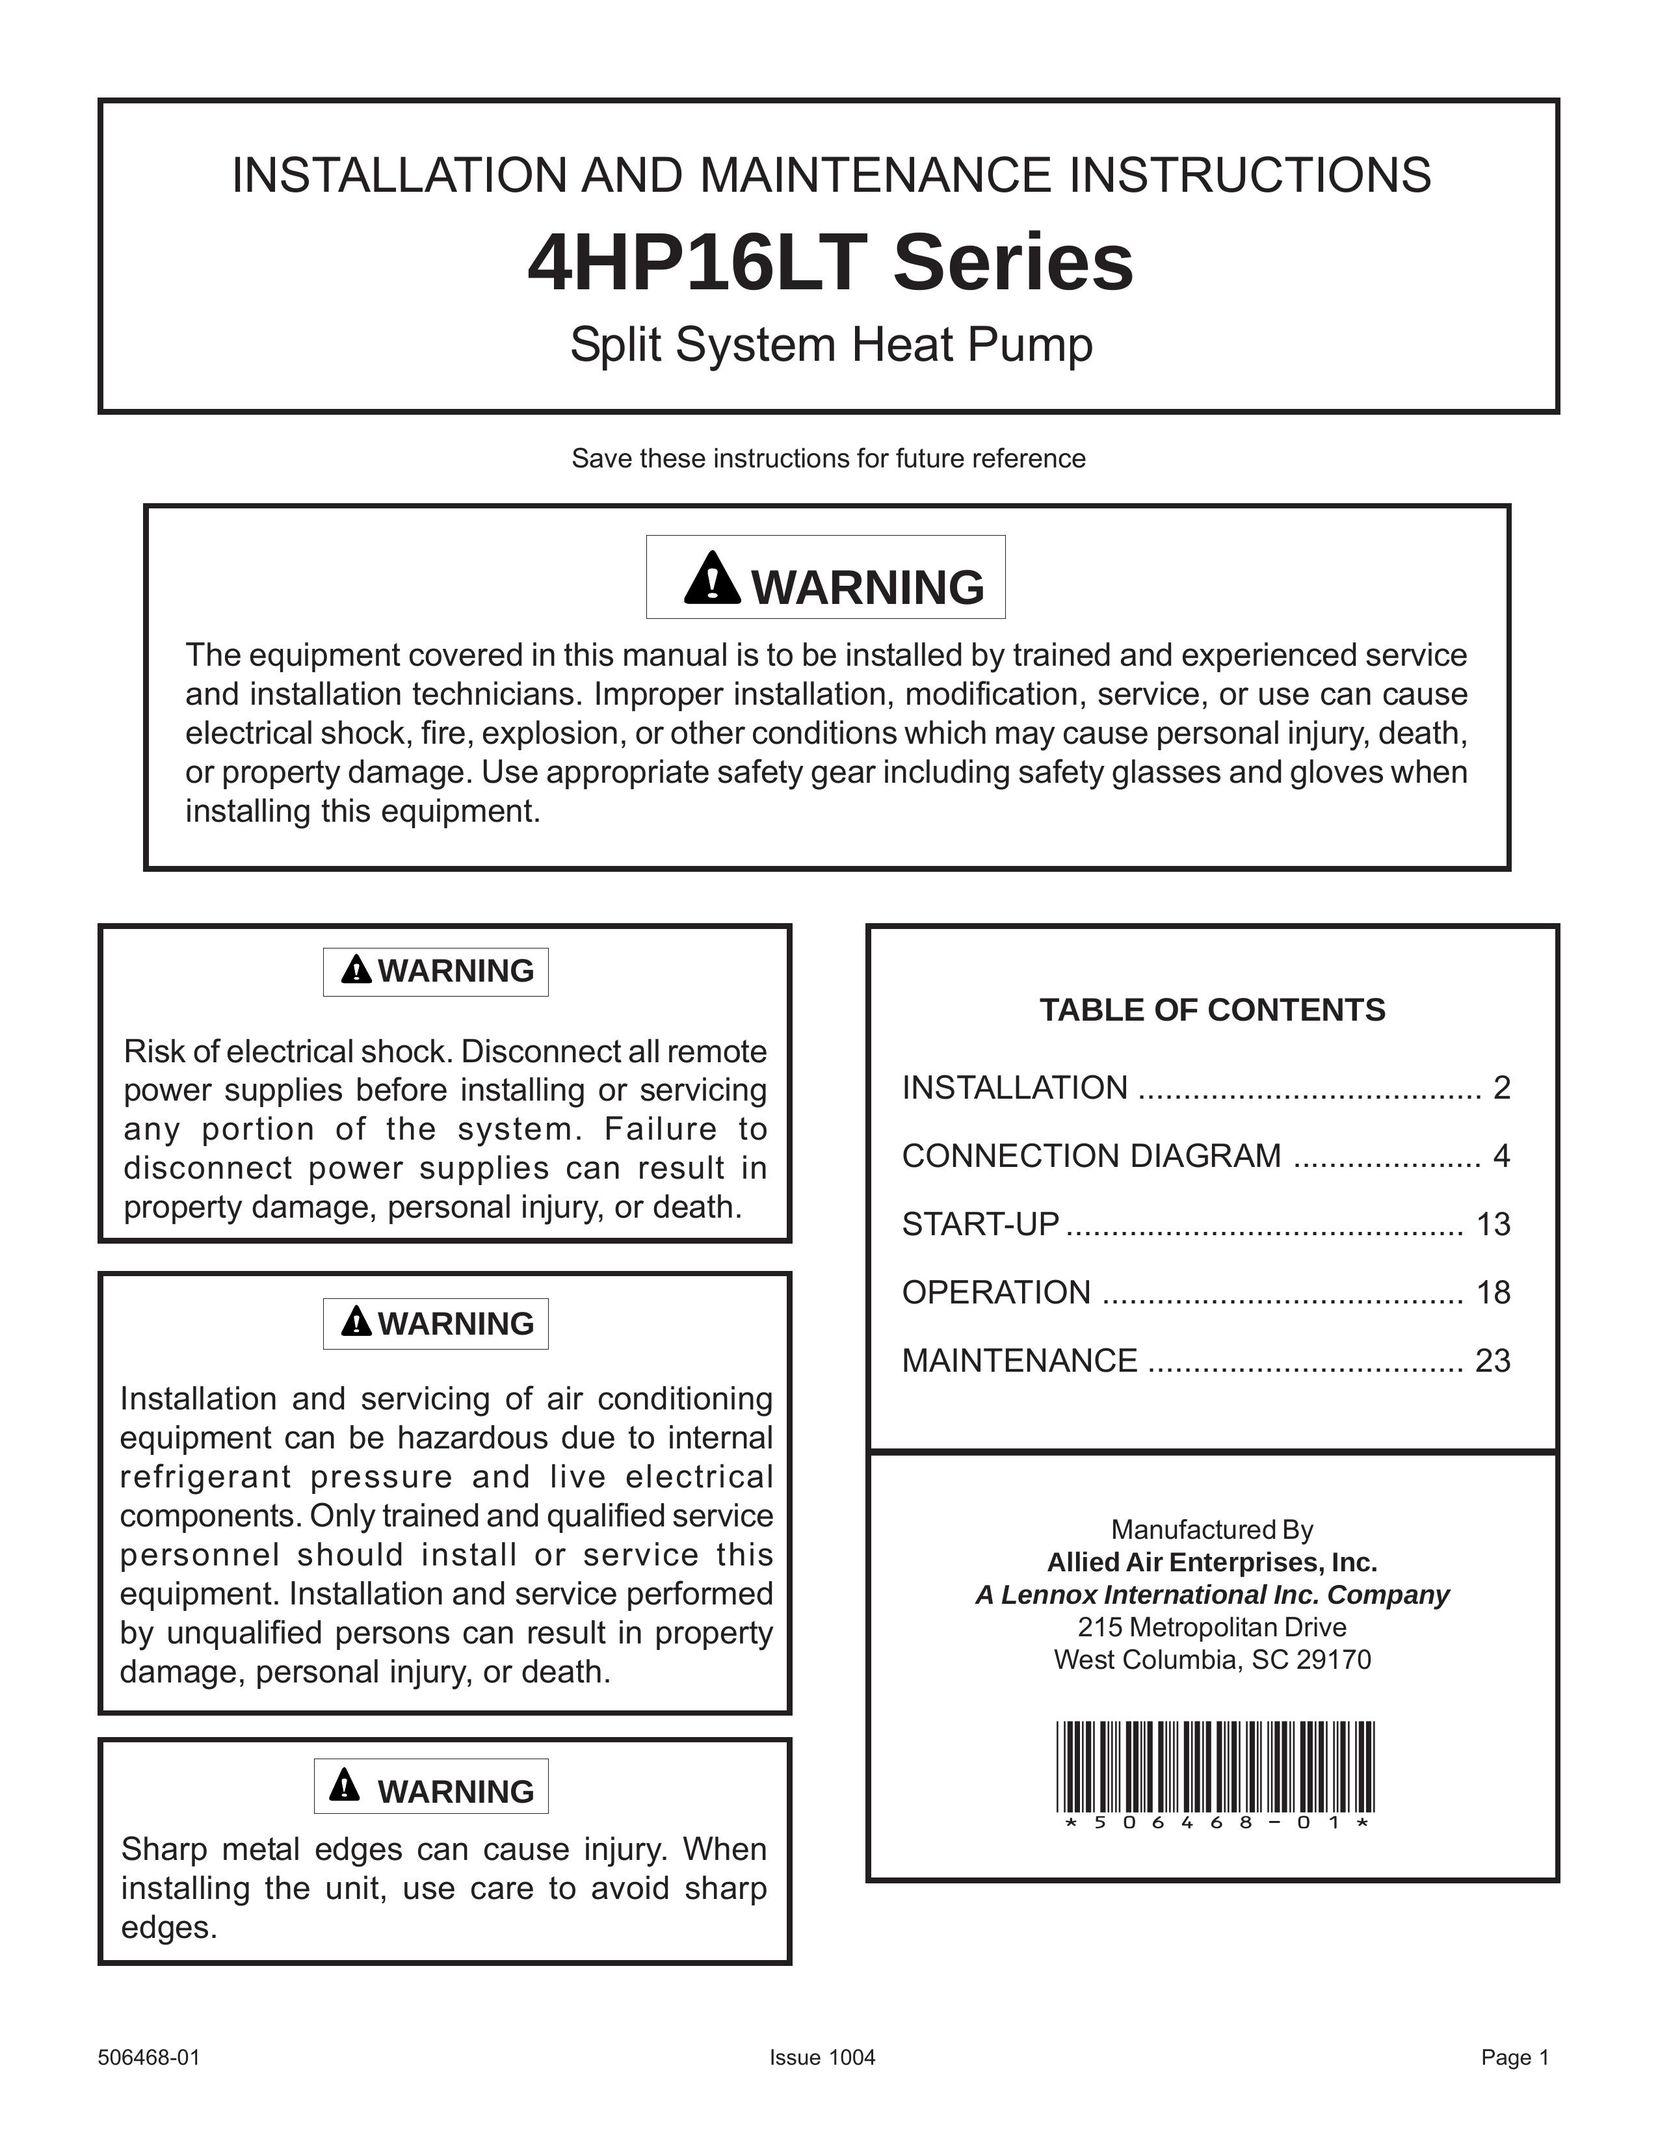 Allied Air Enterprises 4HP16LT Heat Pump User Manual